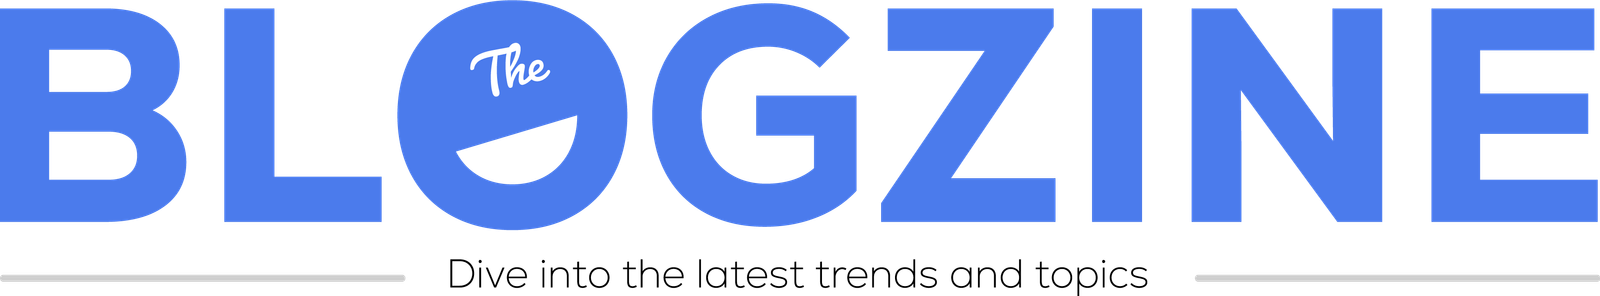 The Blogzine Logo PNG